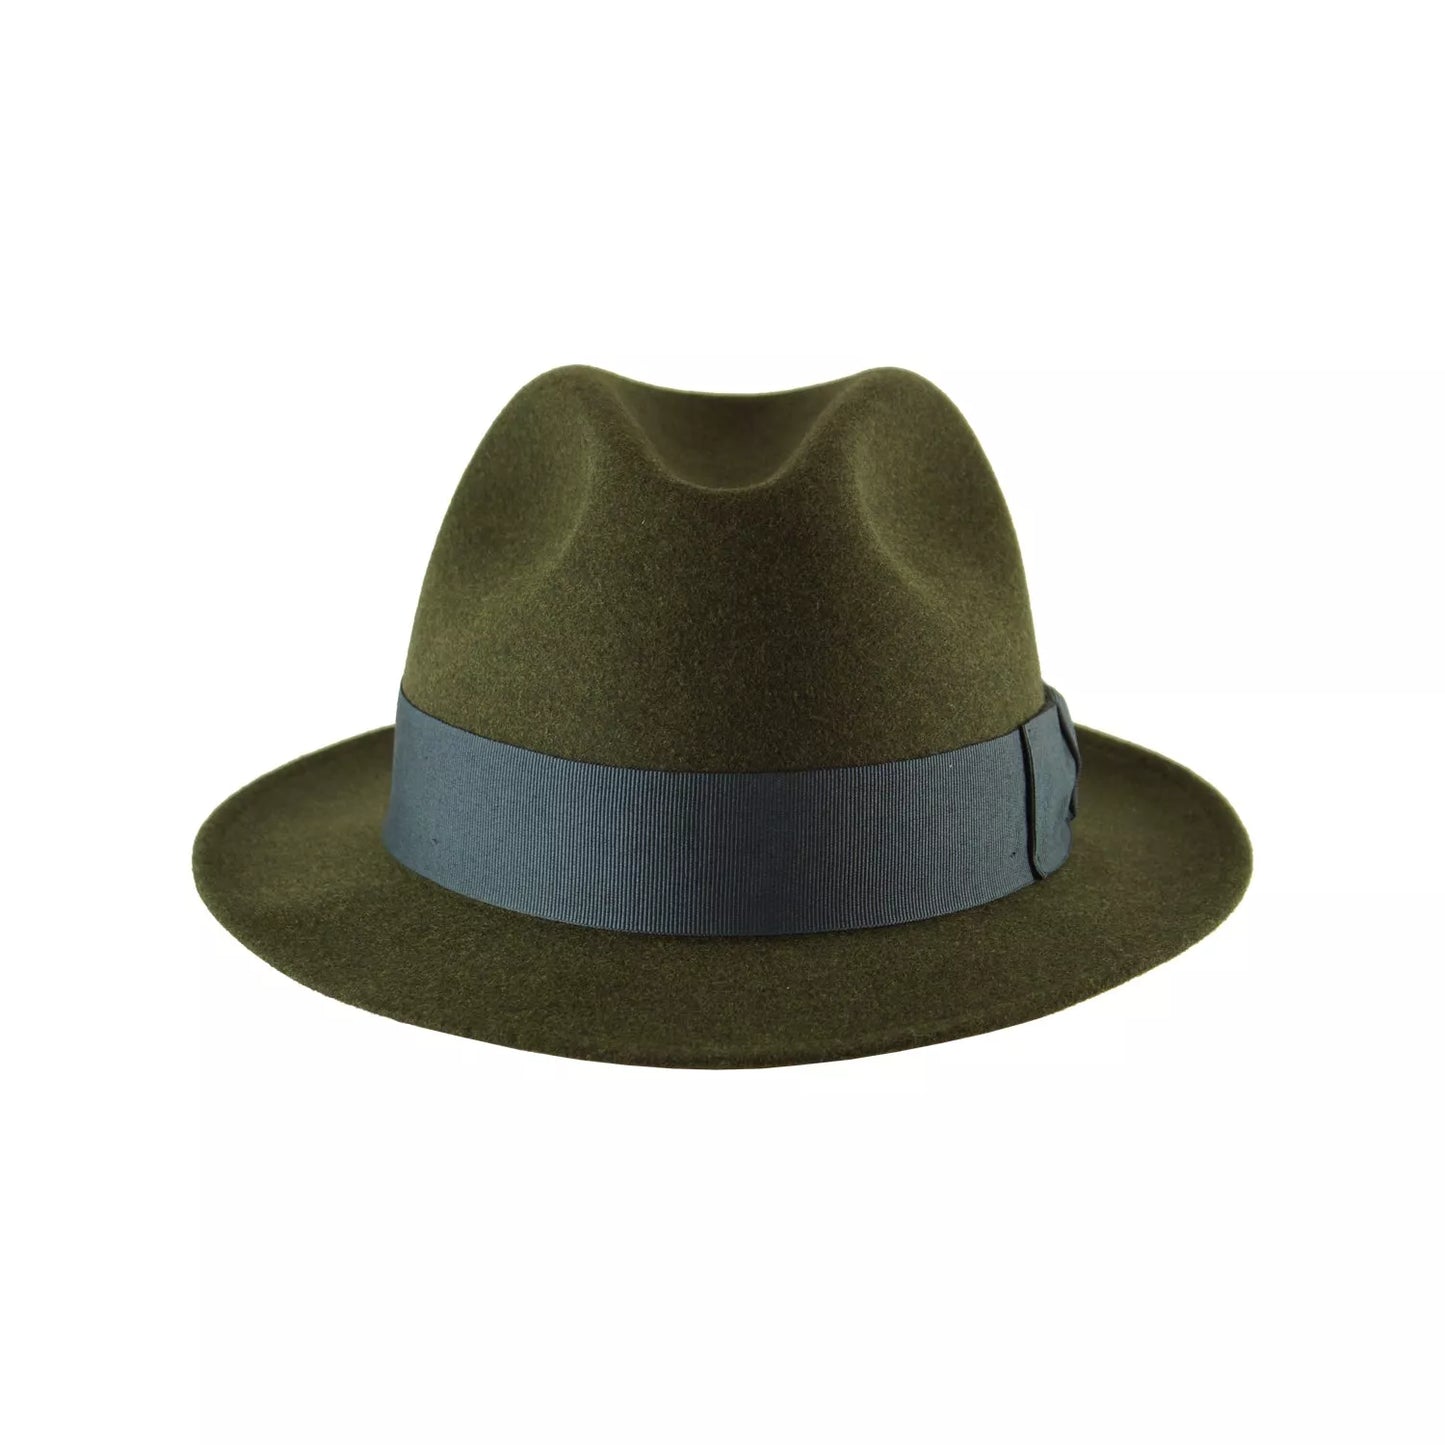 Capo Trilby Hat